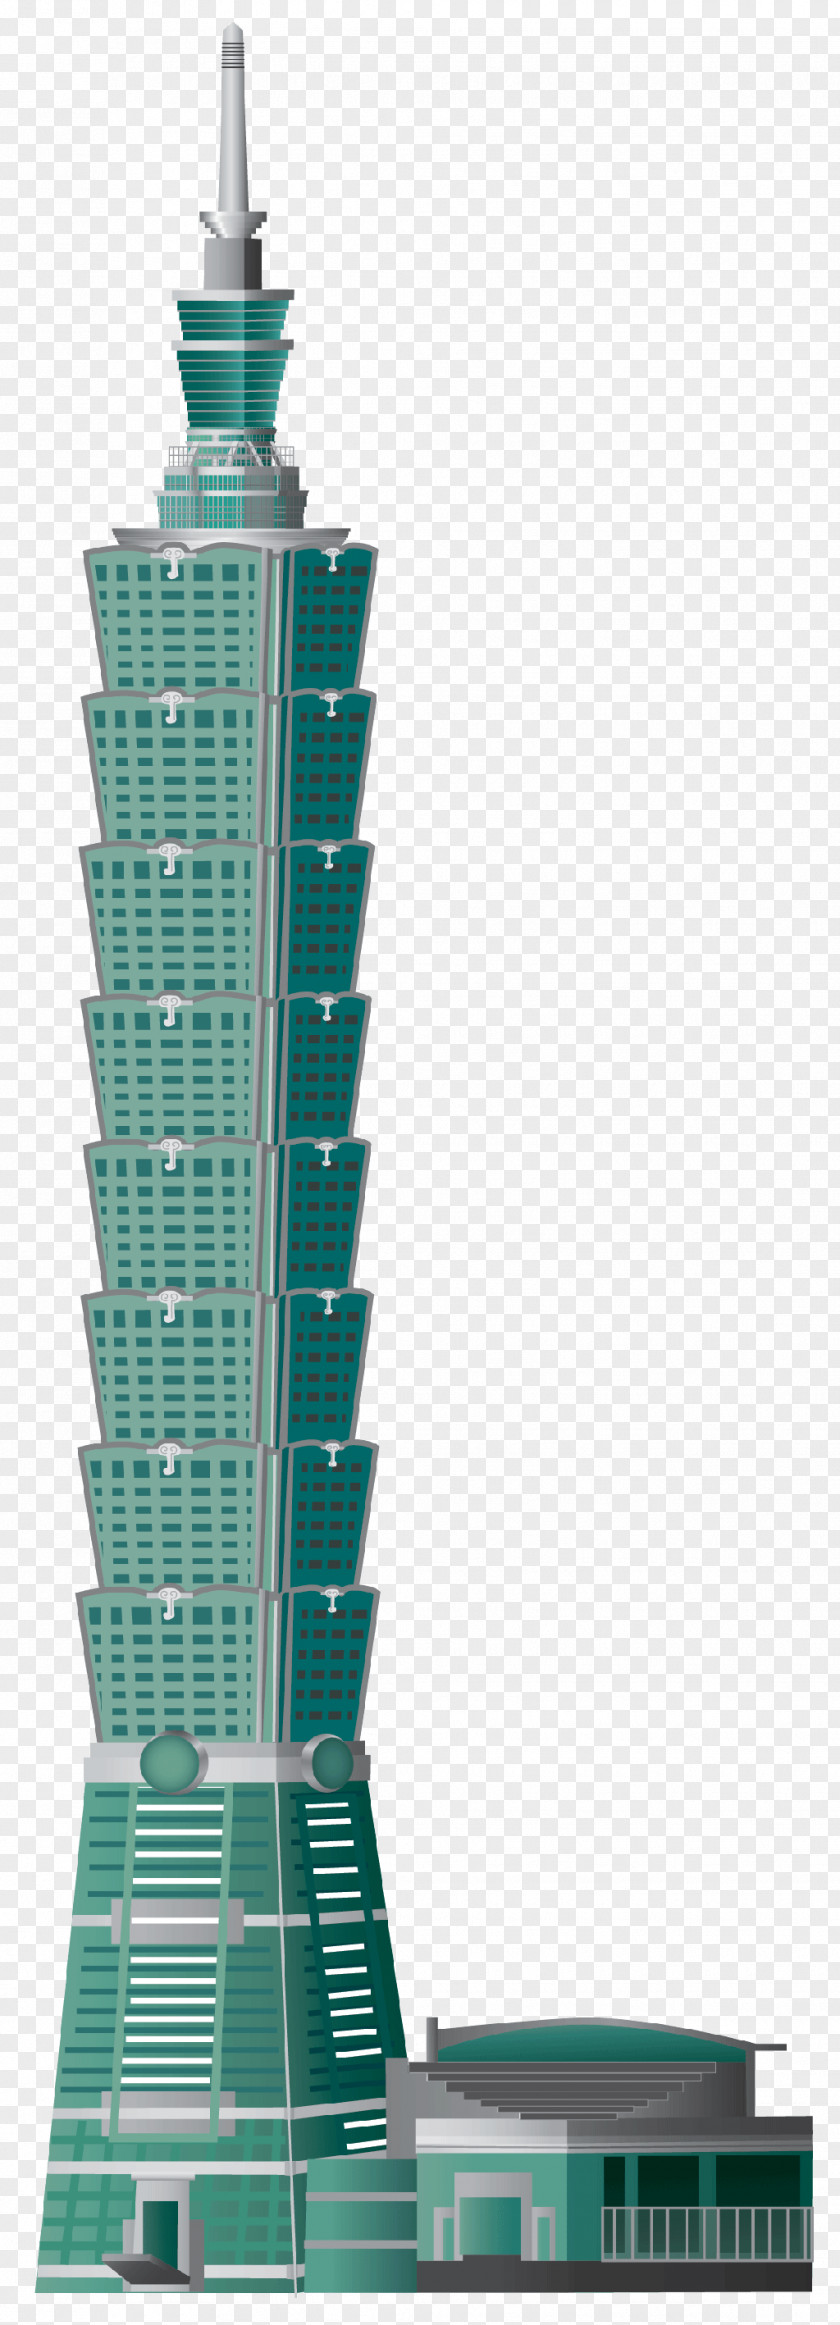 Executive Towers High-rise Building SkyscraperBurj Khalifa Tower M PNG